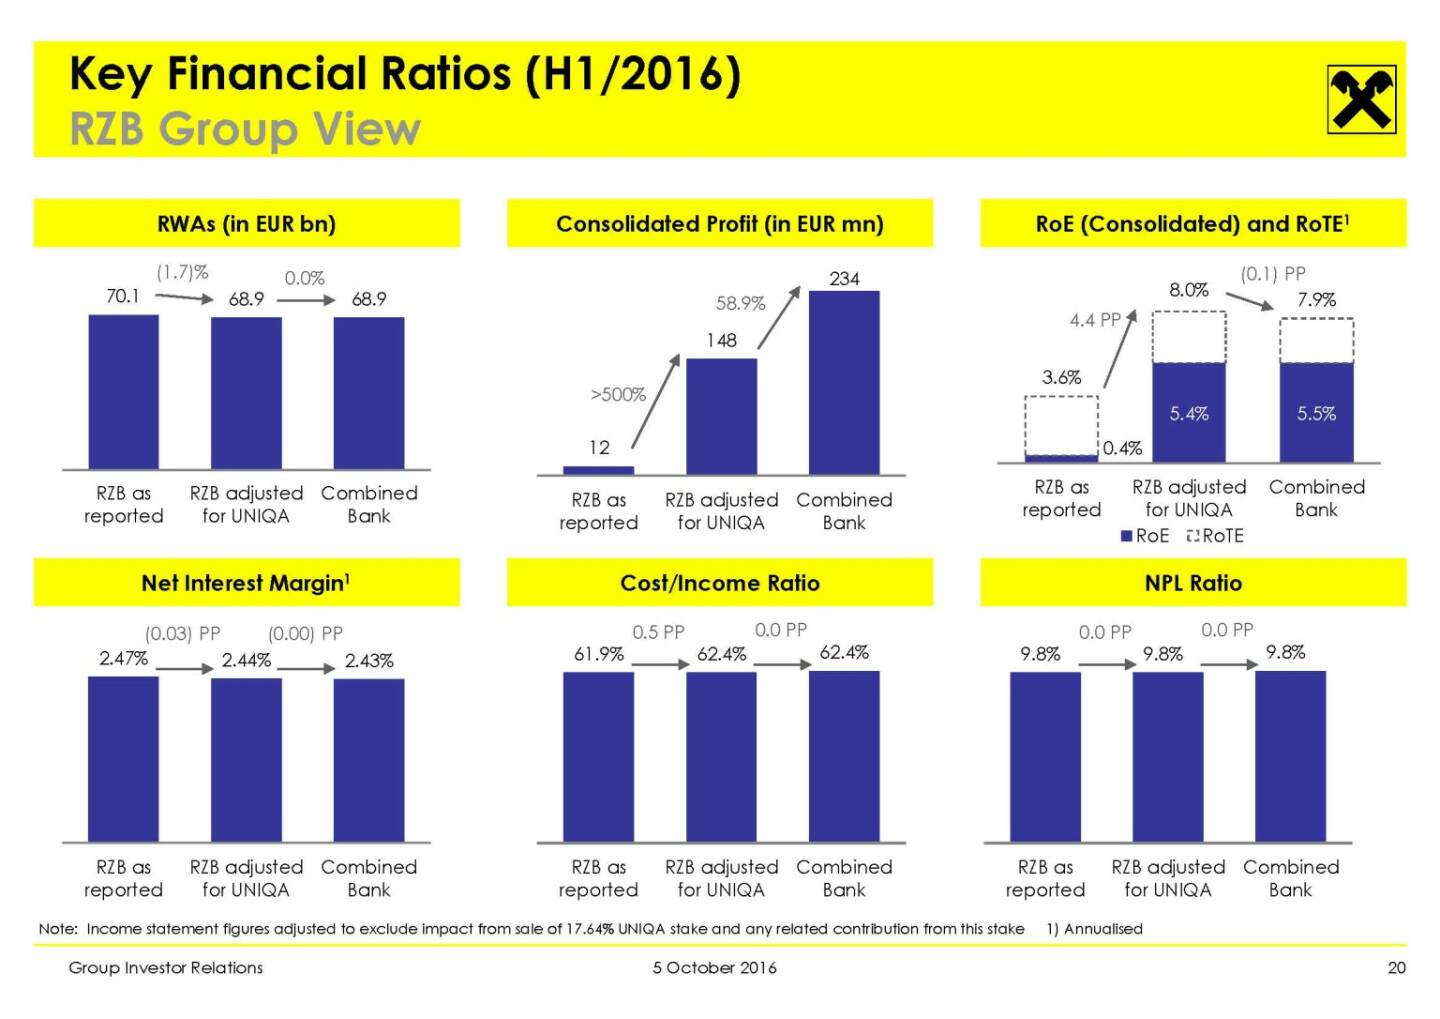 RBI - Key Financial Ratios (H1/2016)